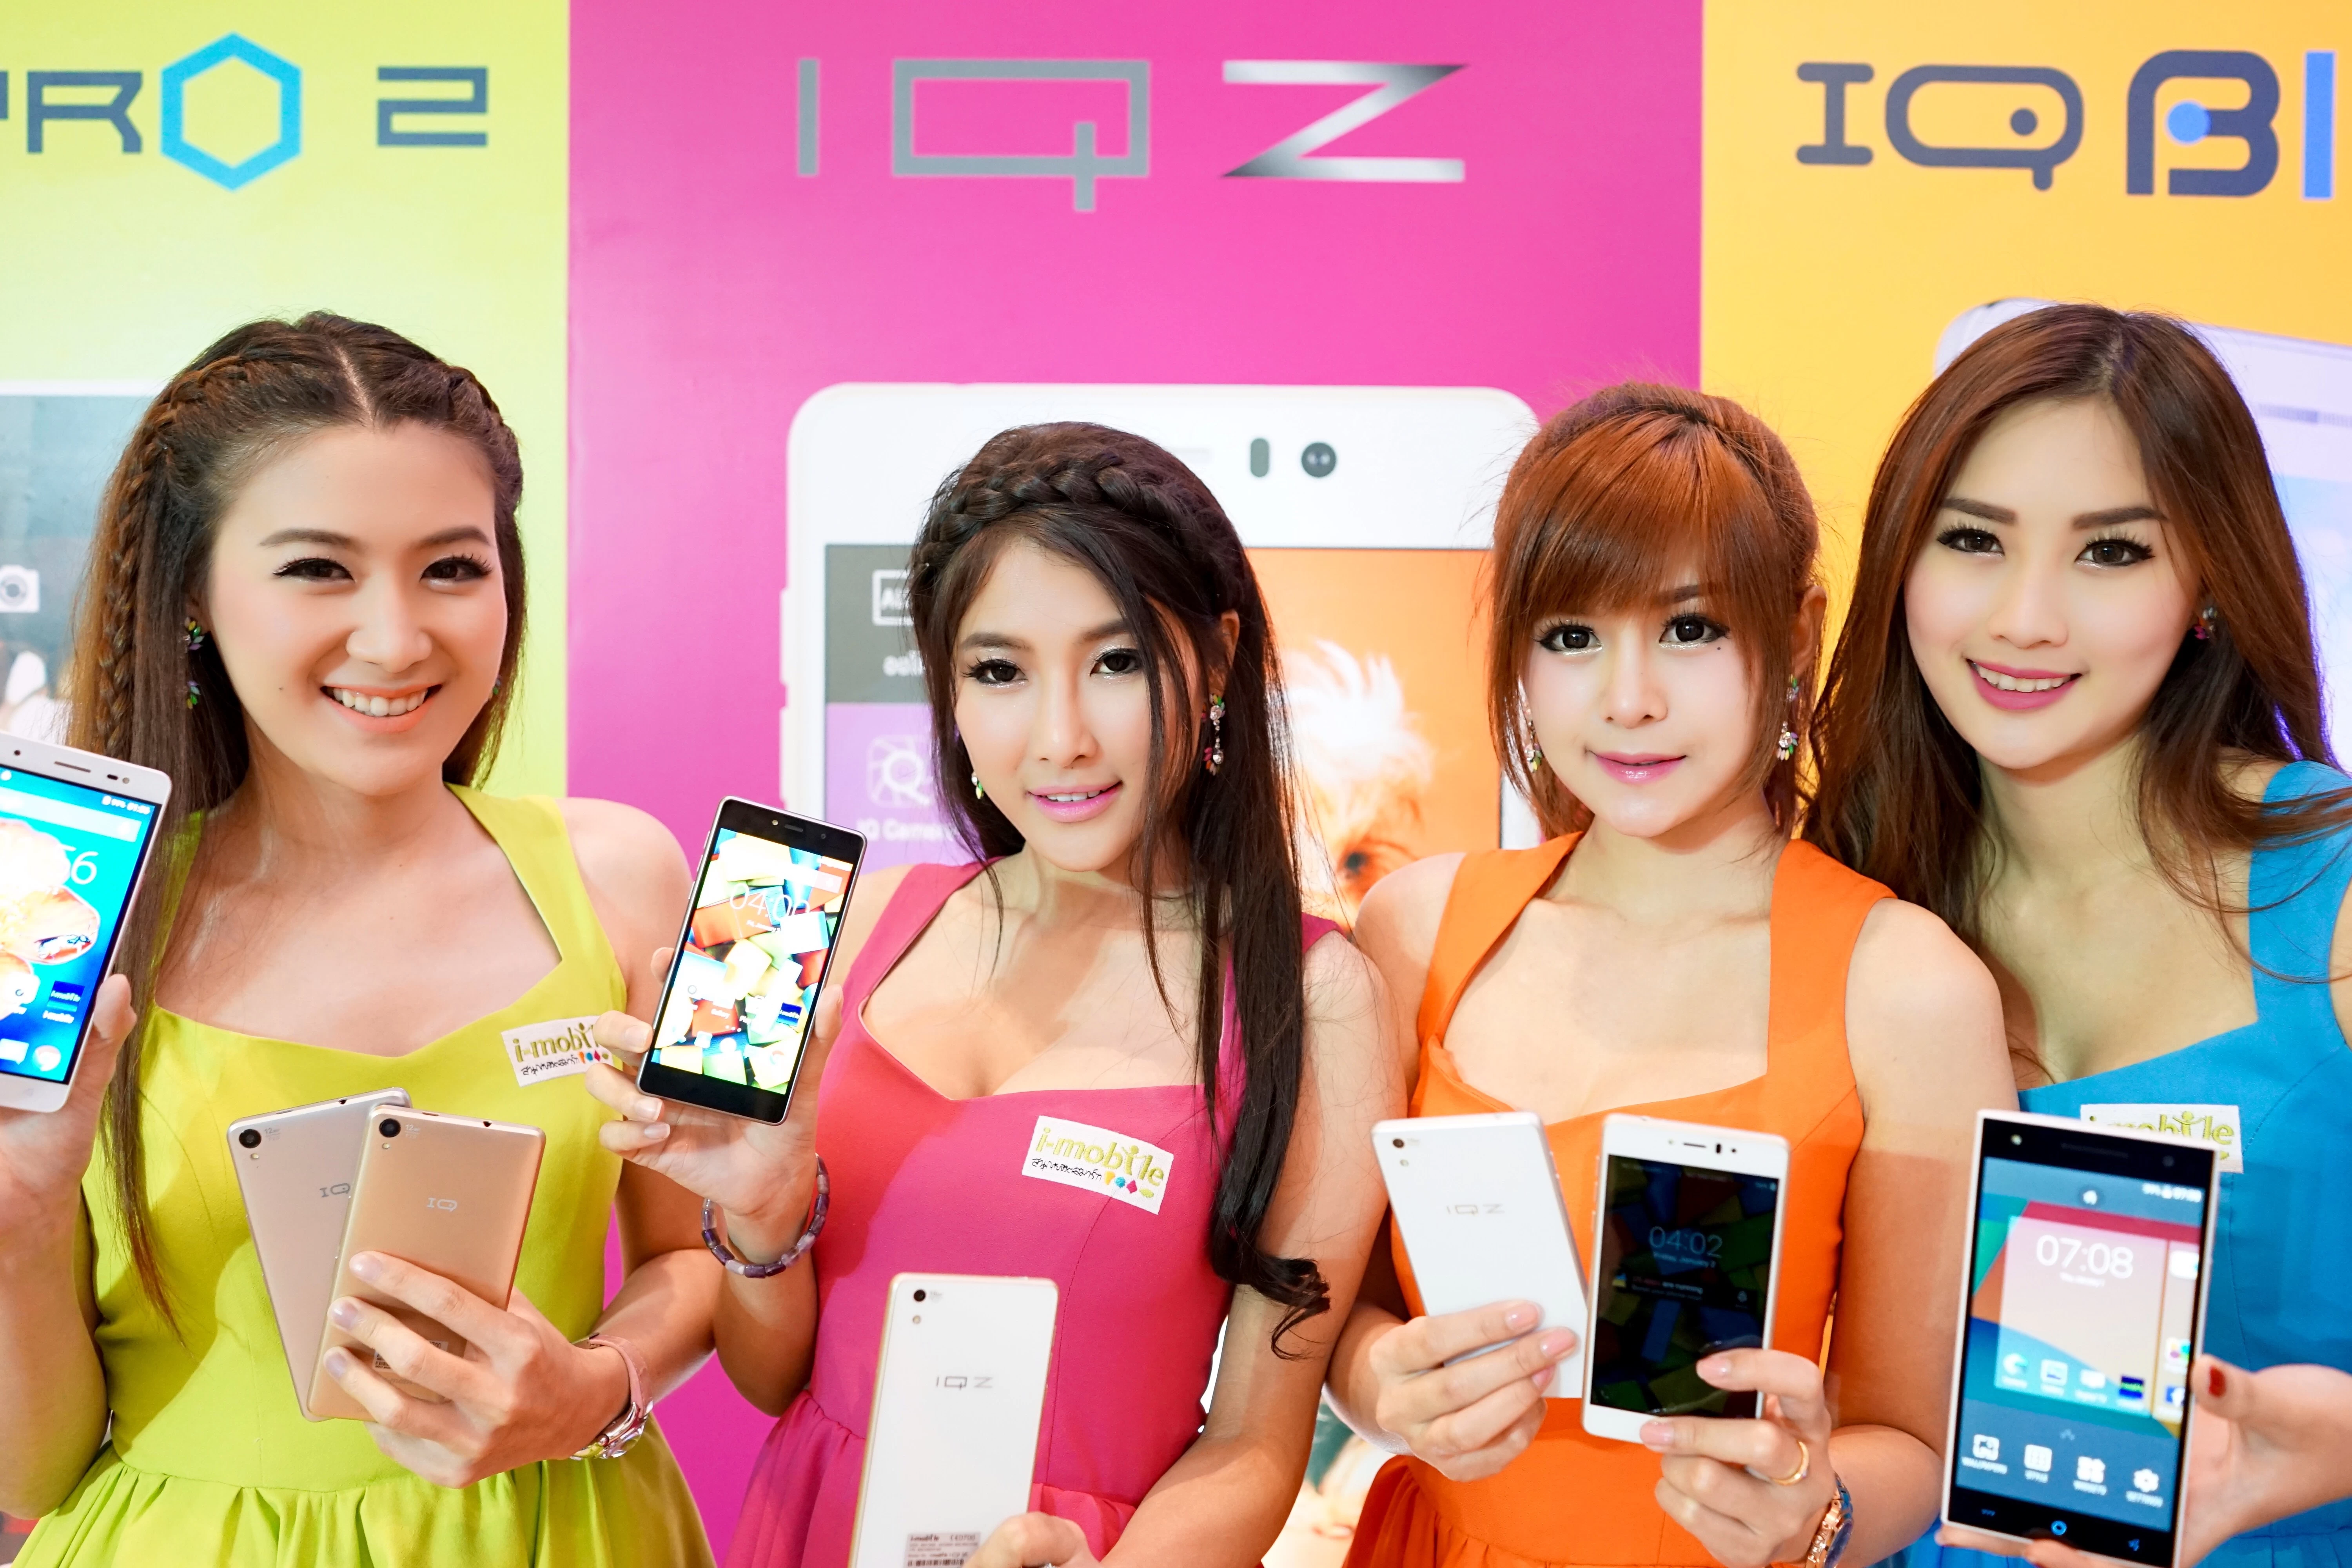 image14 | IQ Z | I Mobile เปิดสามตัวมหัศจรรย์ IQ BIG 2, IQ Z, IQ X PRO2 สมาร์ทโฟน Android กล้องหลังความละเอียด 30 ล้าน